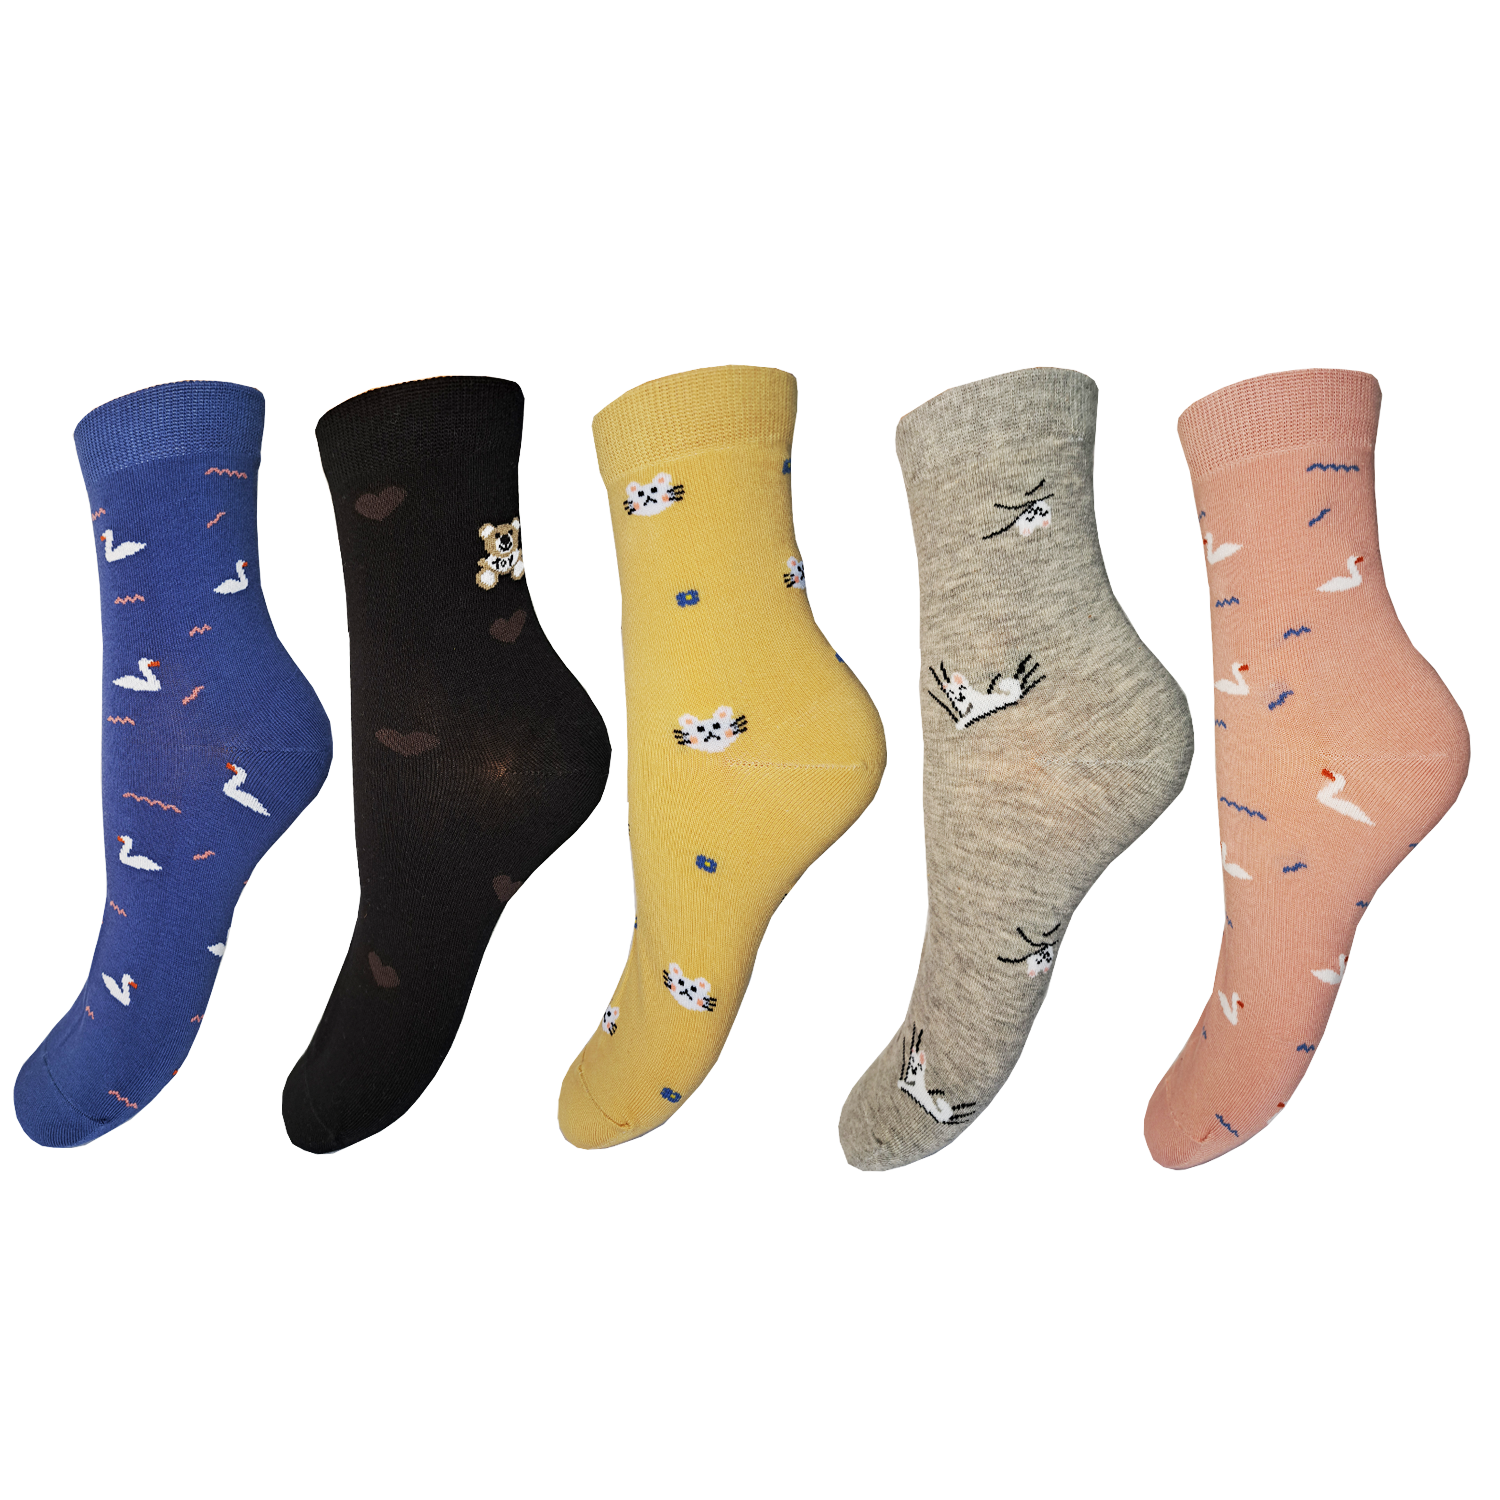 Dámské ponožky Aura.Via - NZP8115, mix barev Barva: Mix barev, Velikost: 35-38